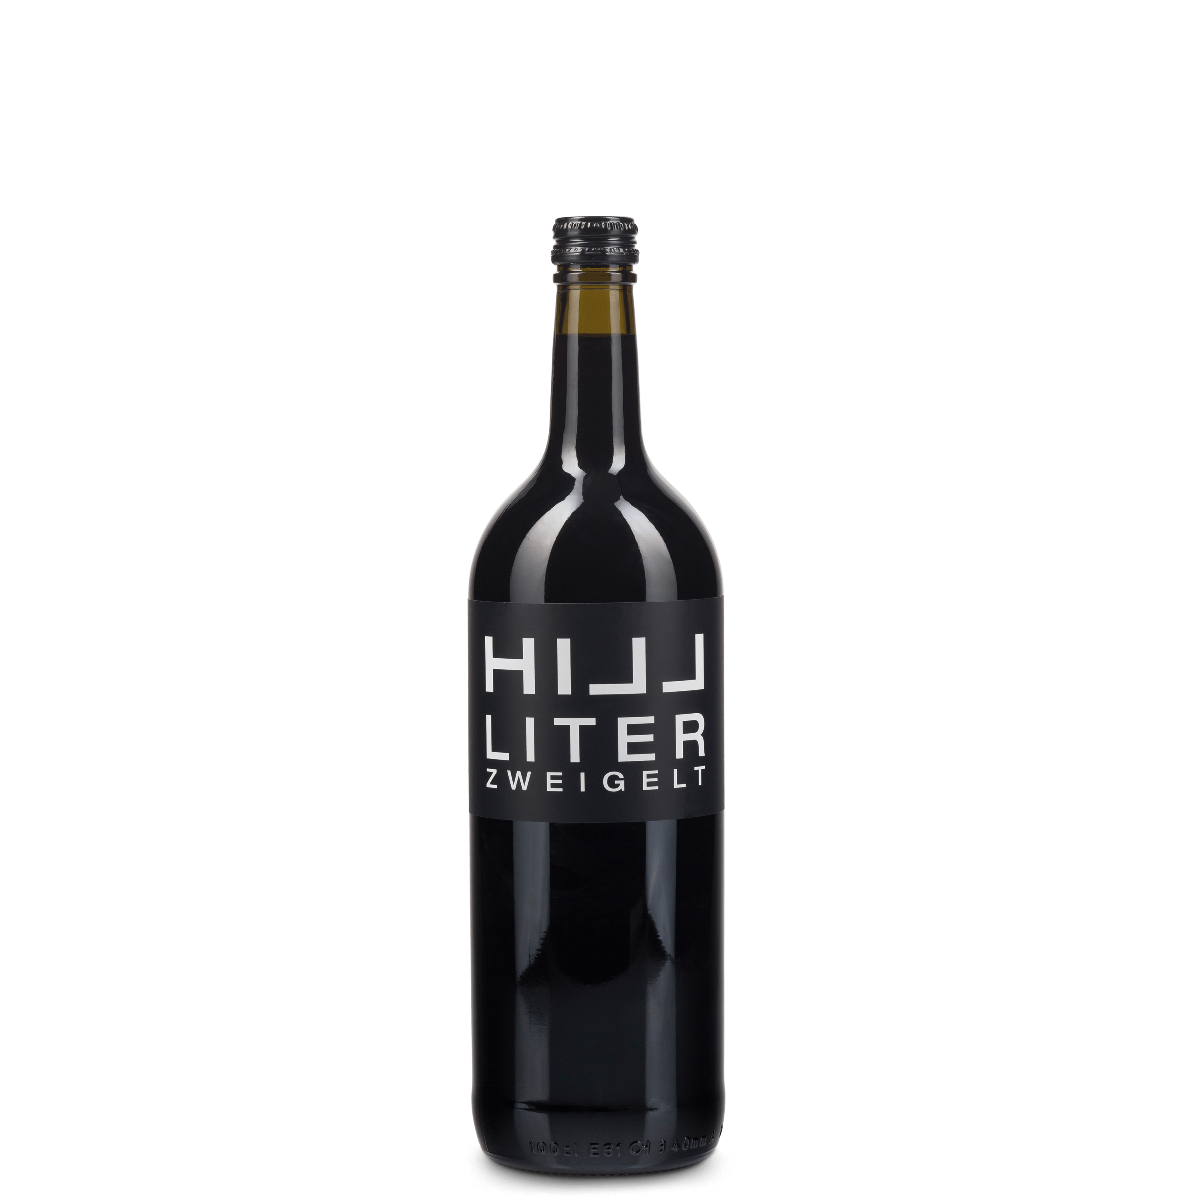 Leo Hillinger »Hill Liter« Zweigelt